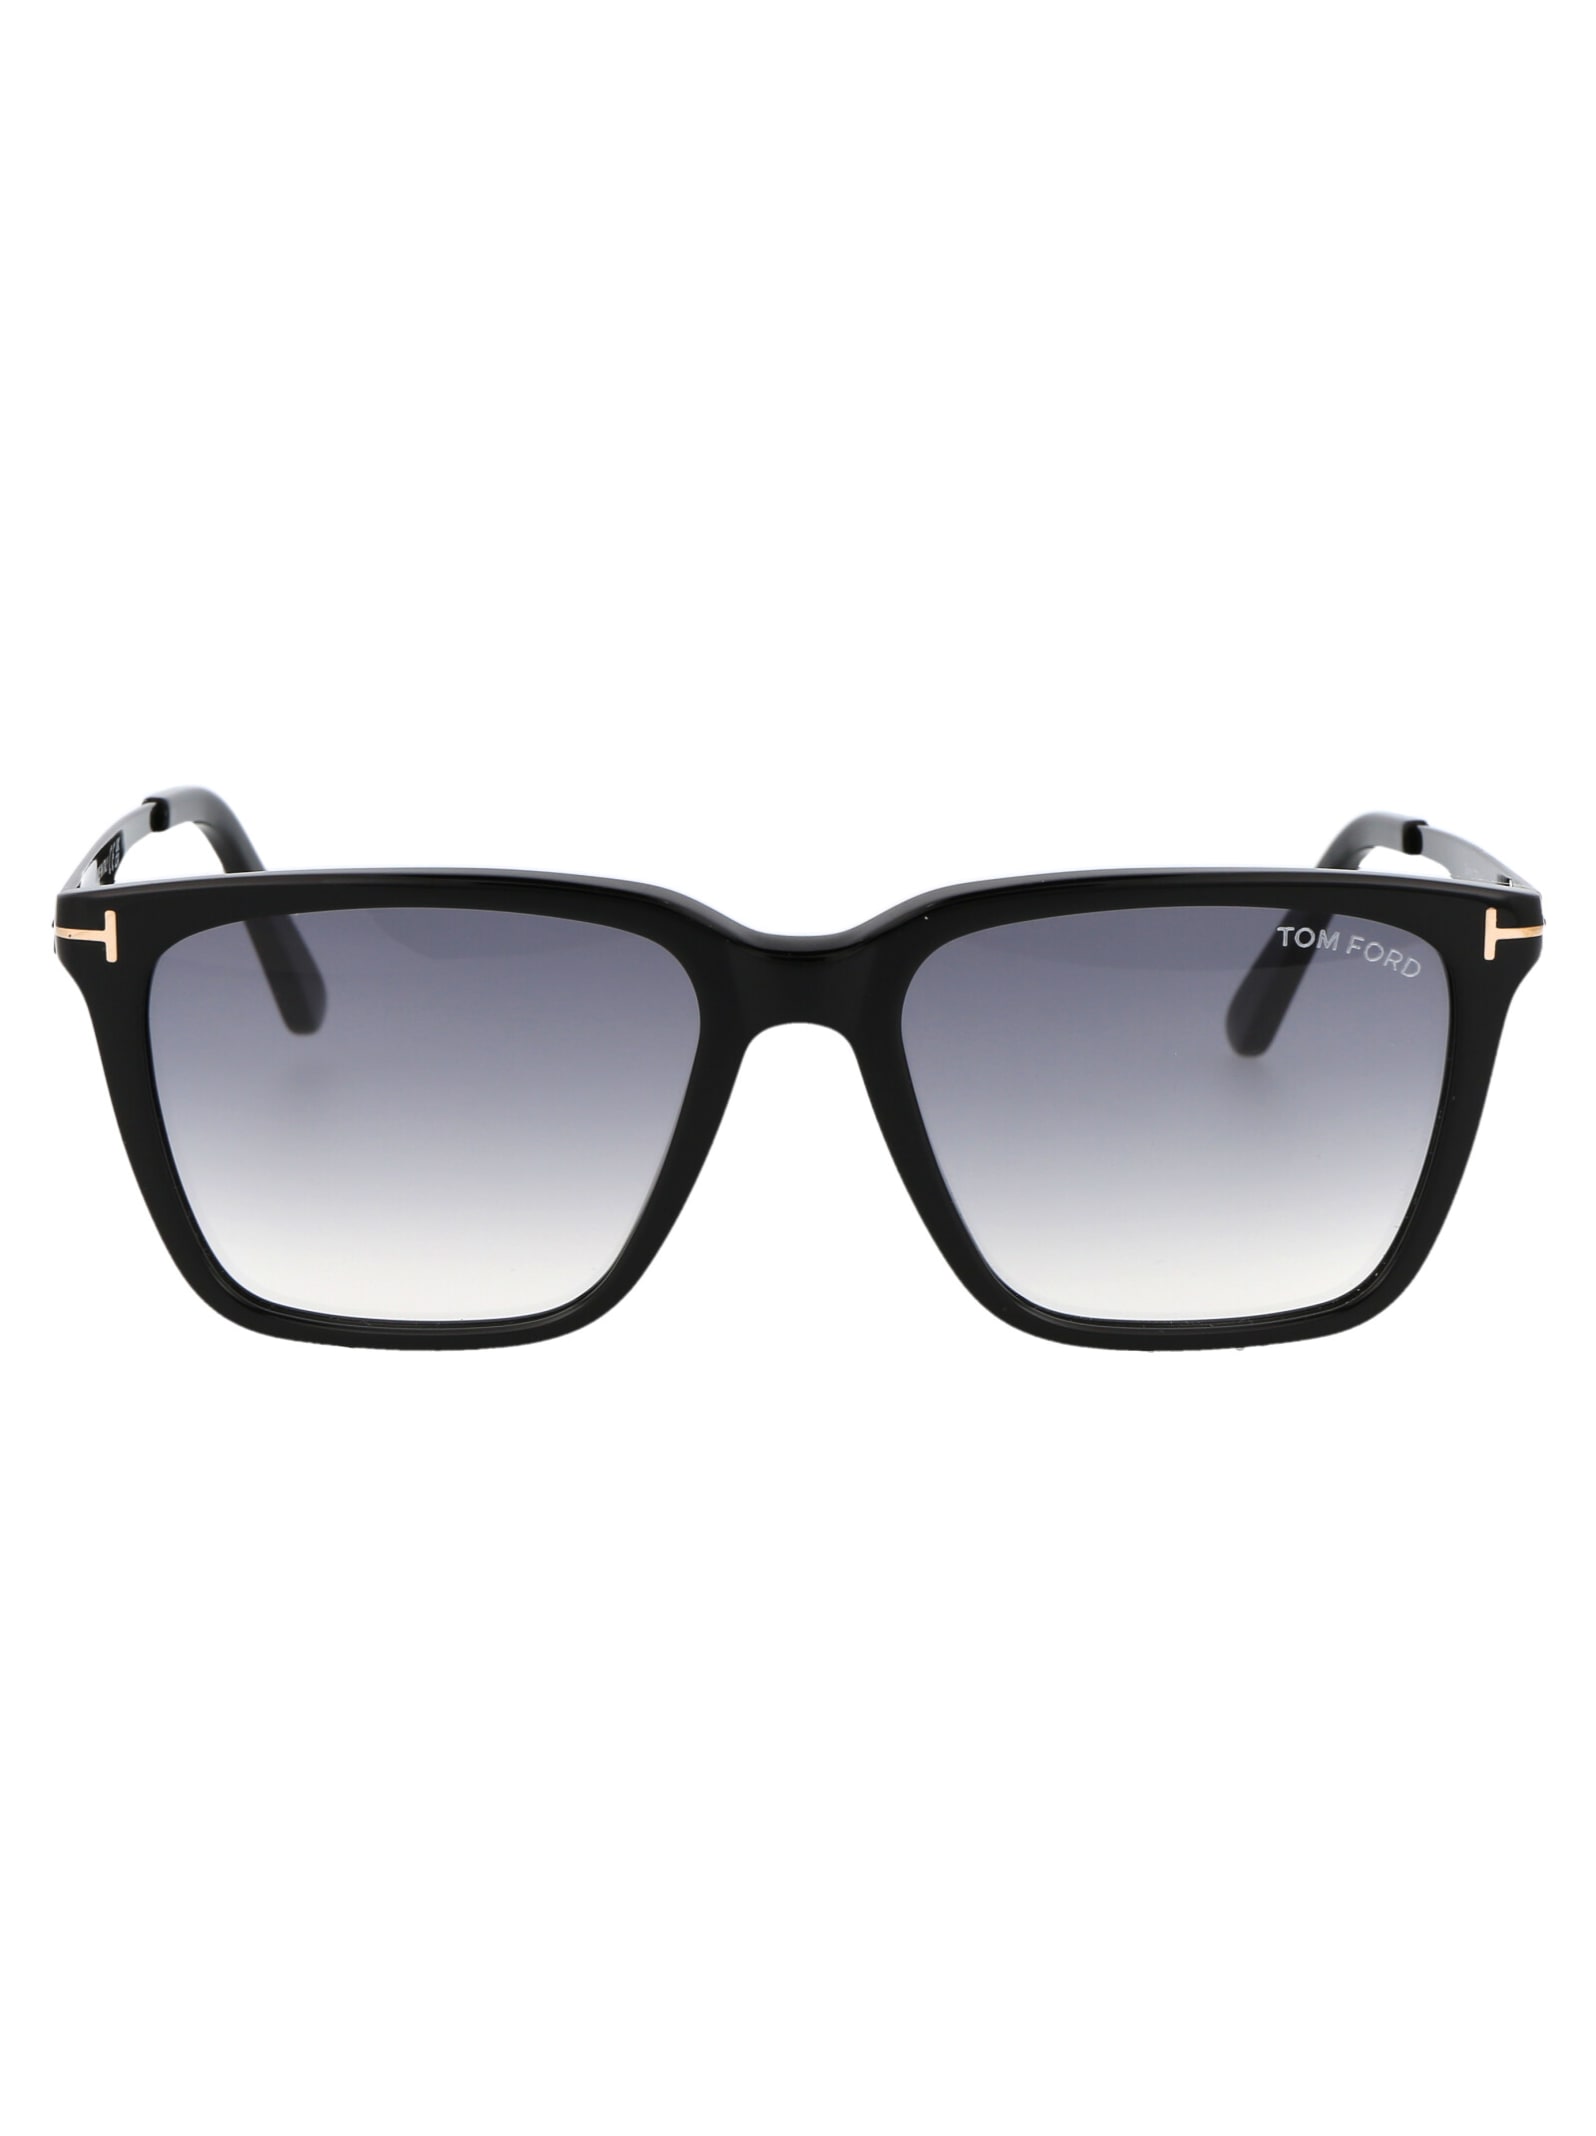 Tom Ford Eyewear Ft0862 Sunglasses